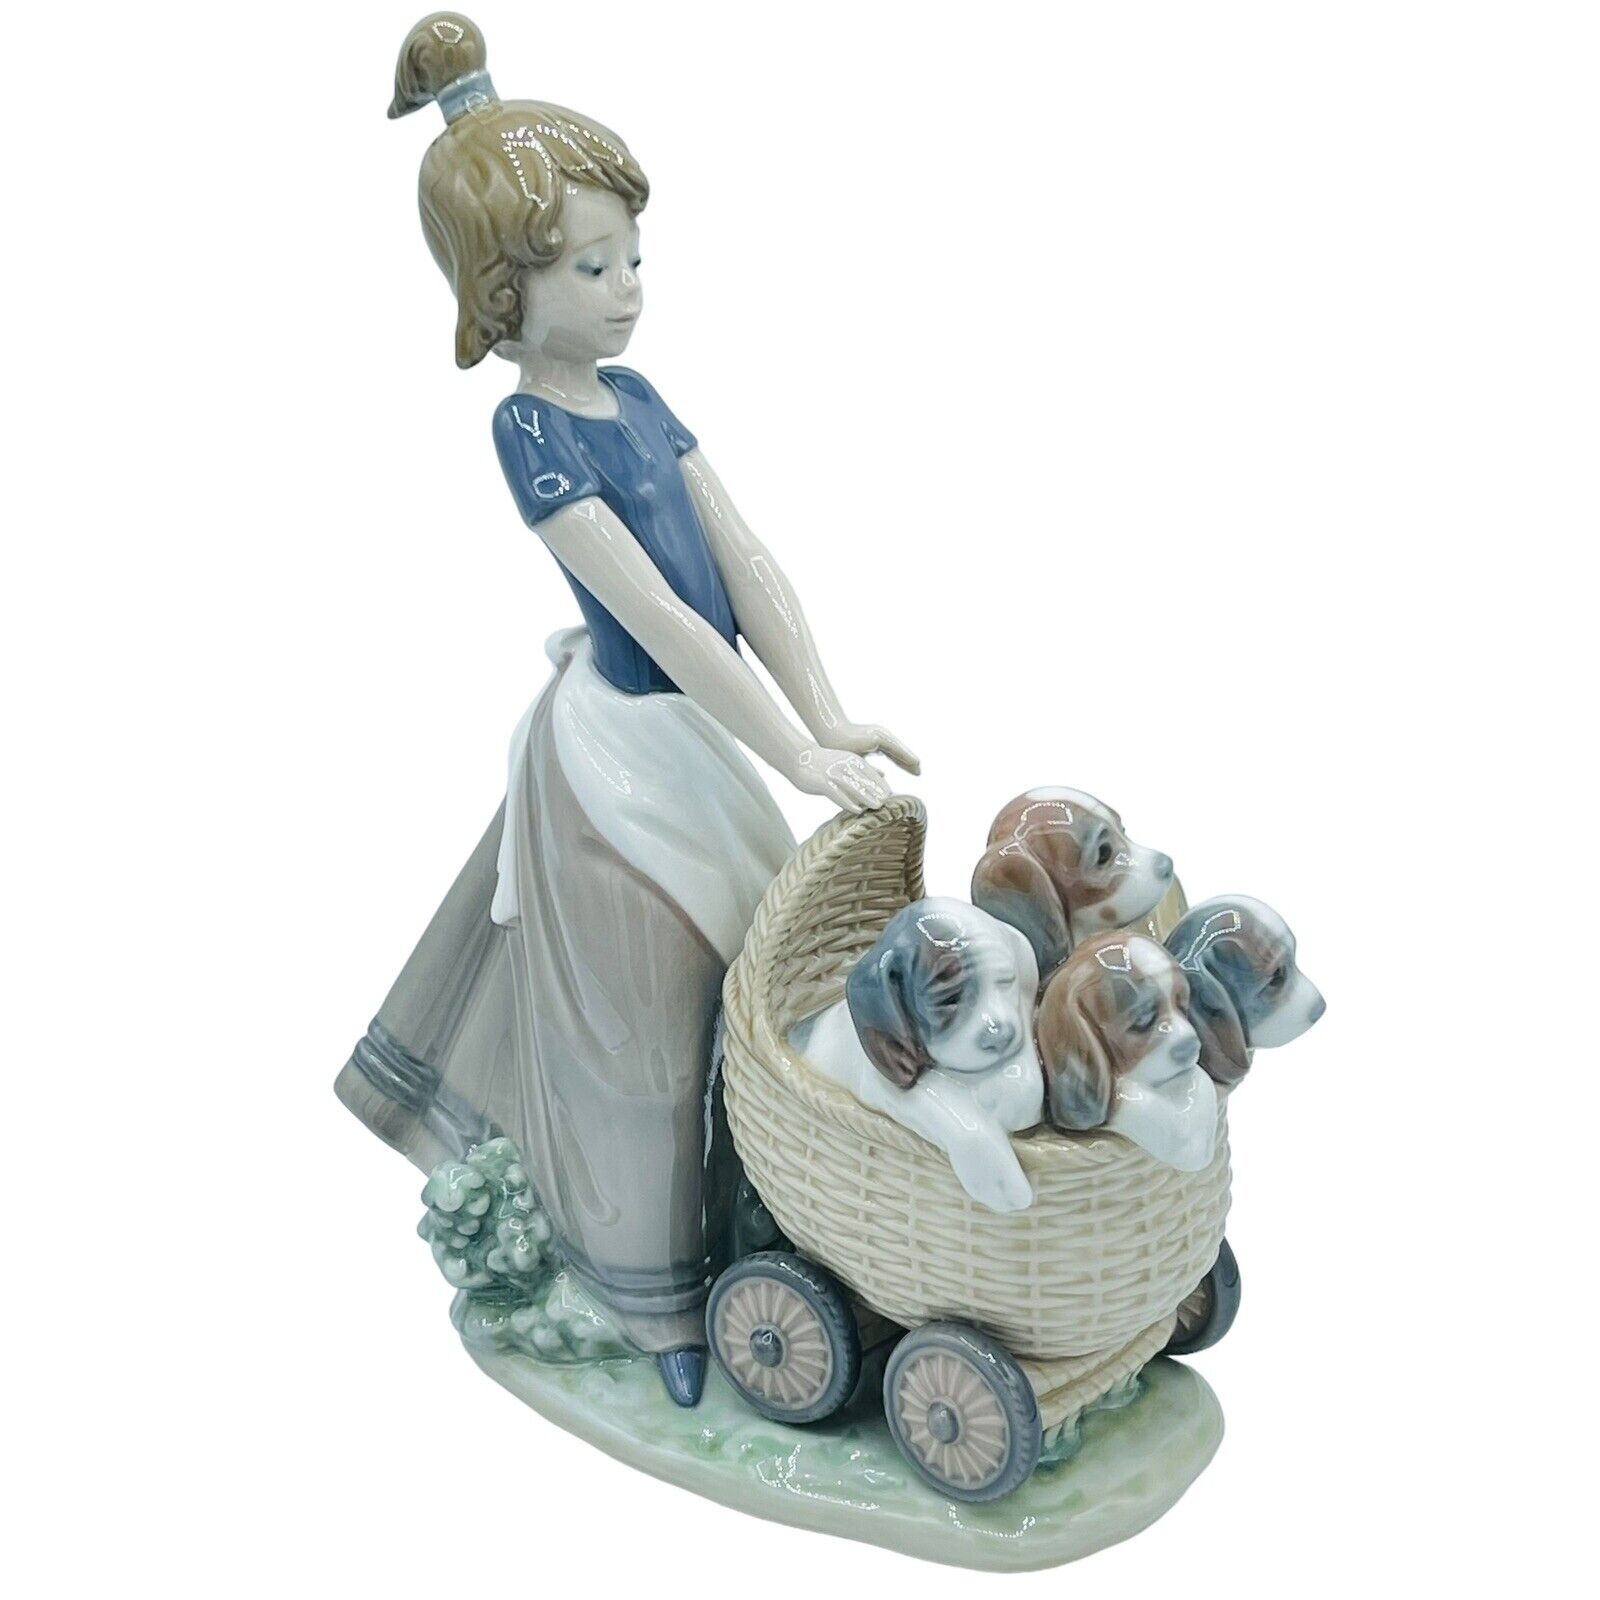 Lladro 5364 Litter of Fun Girl With Puppies In Pram Stroller Figurine NO BOX